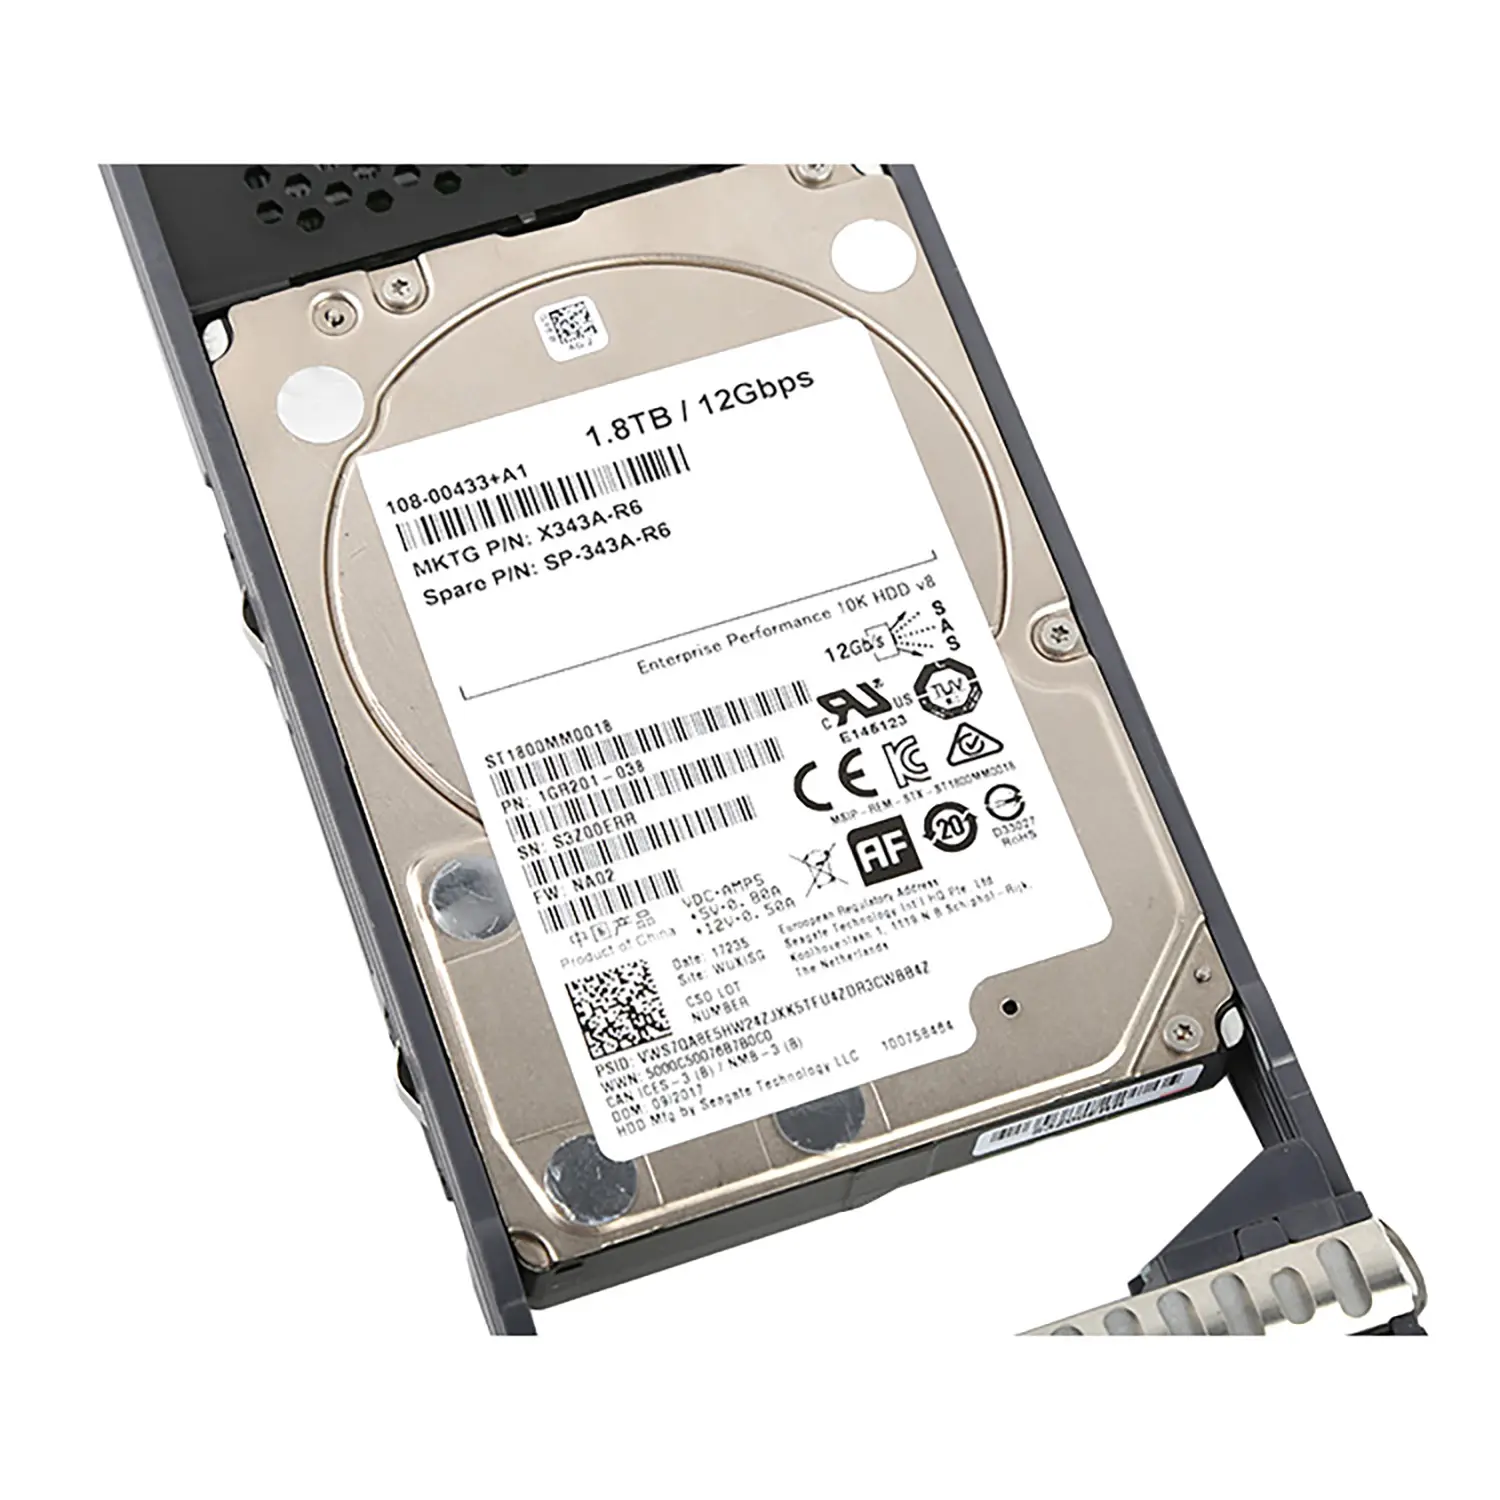 1.8TB hard drive for NetApp 12GB 10K 2.5 inch SAS X343A-R6 FAS2650 DS224C HDD server hard drive